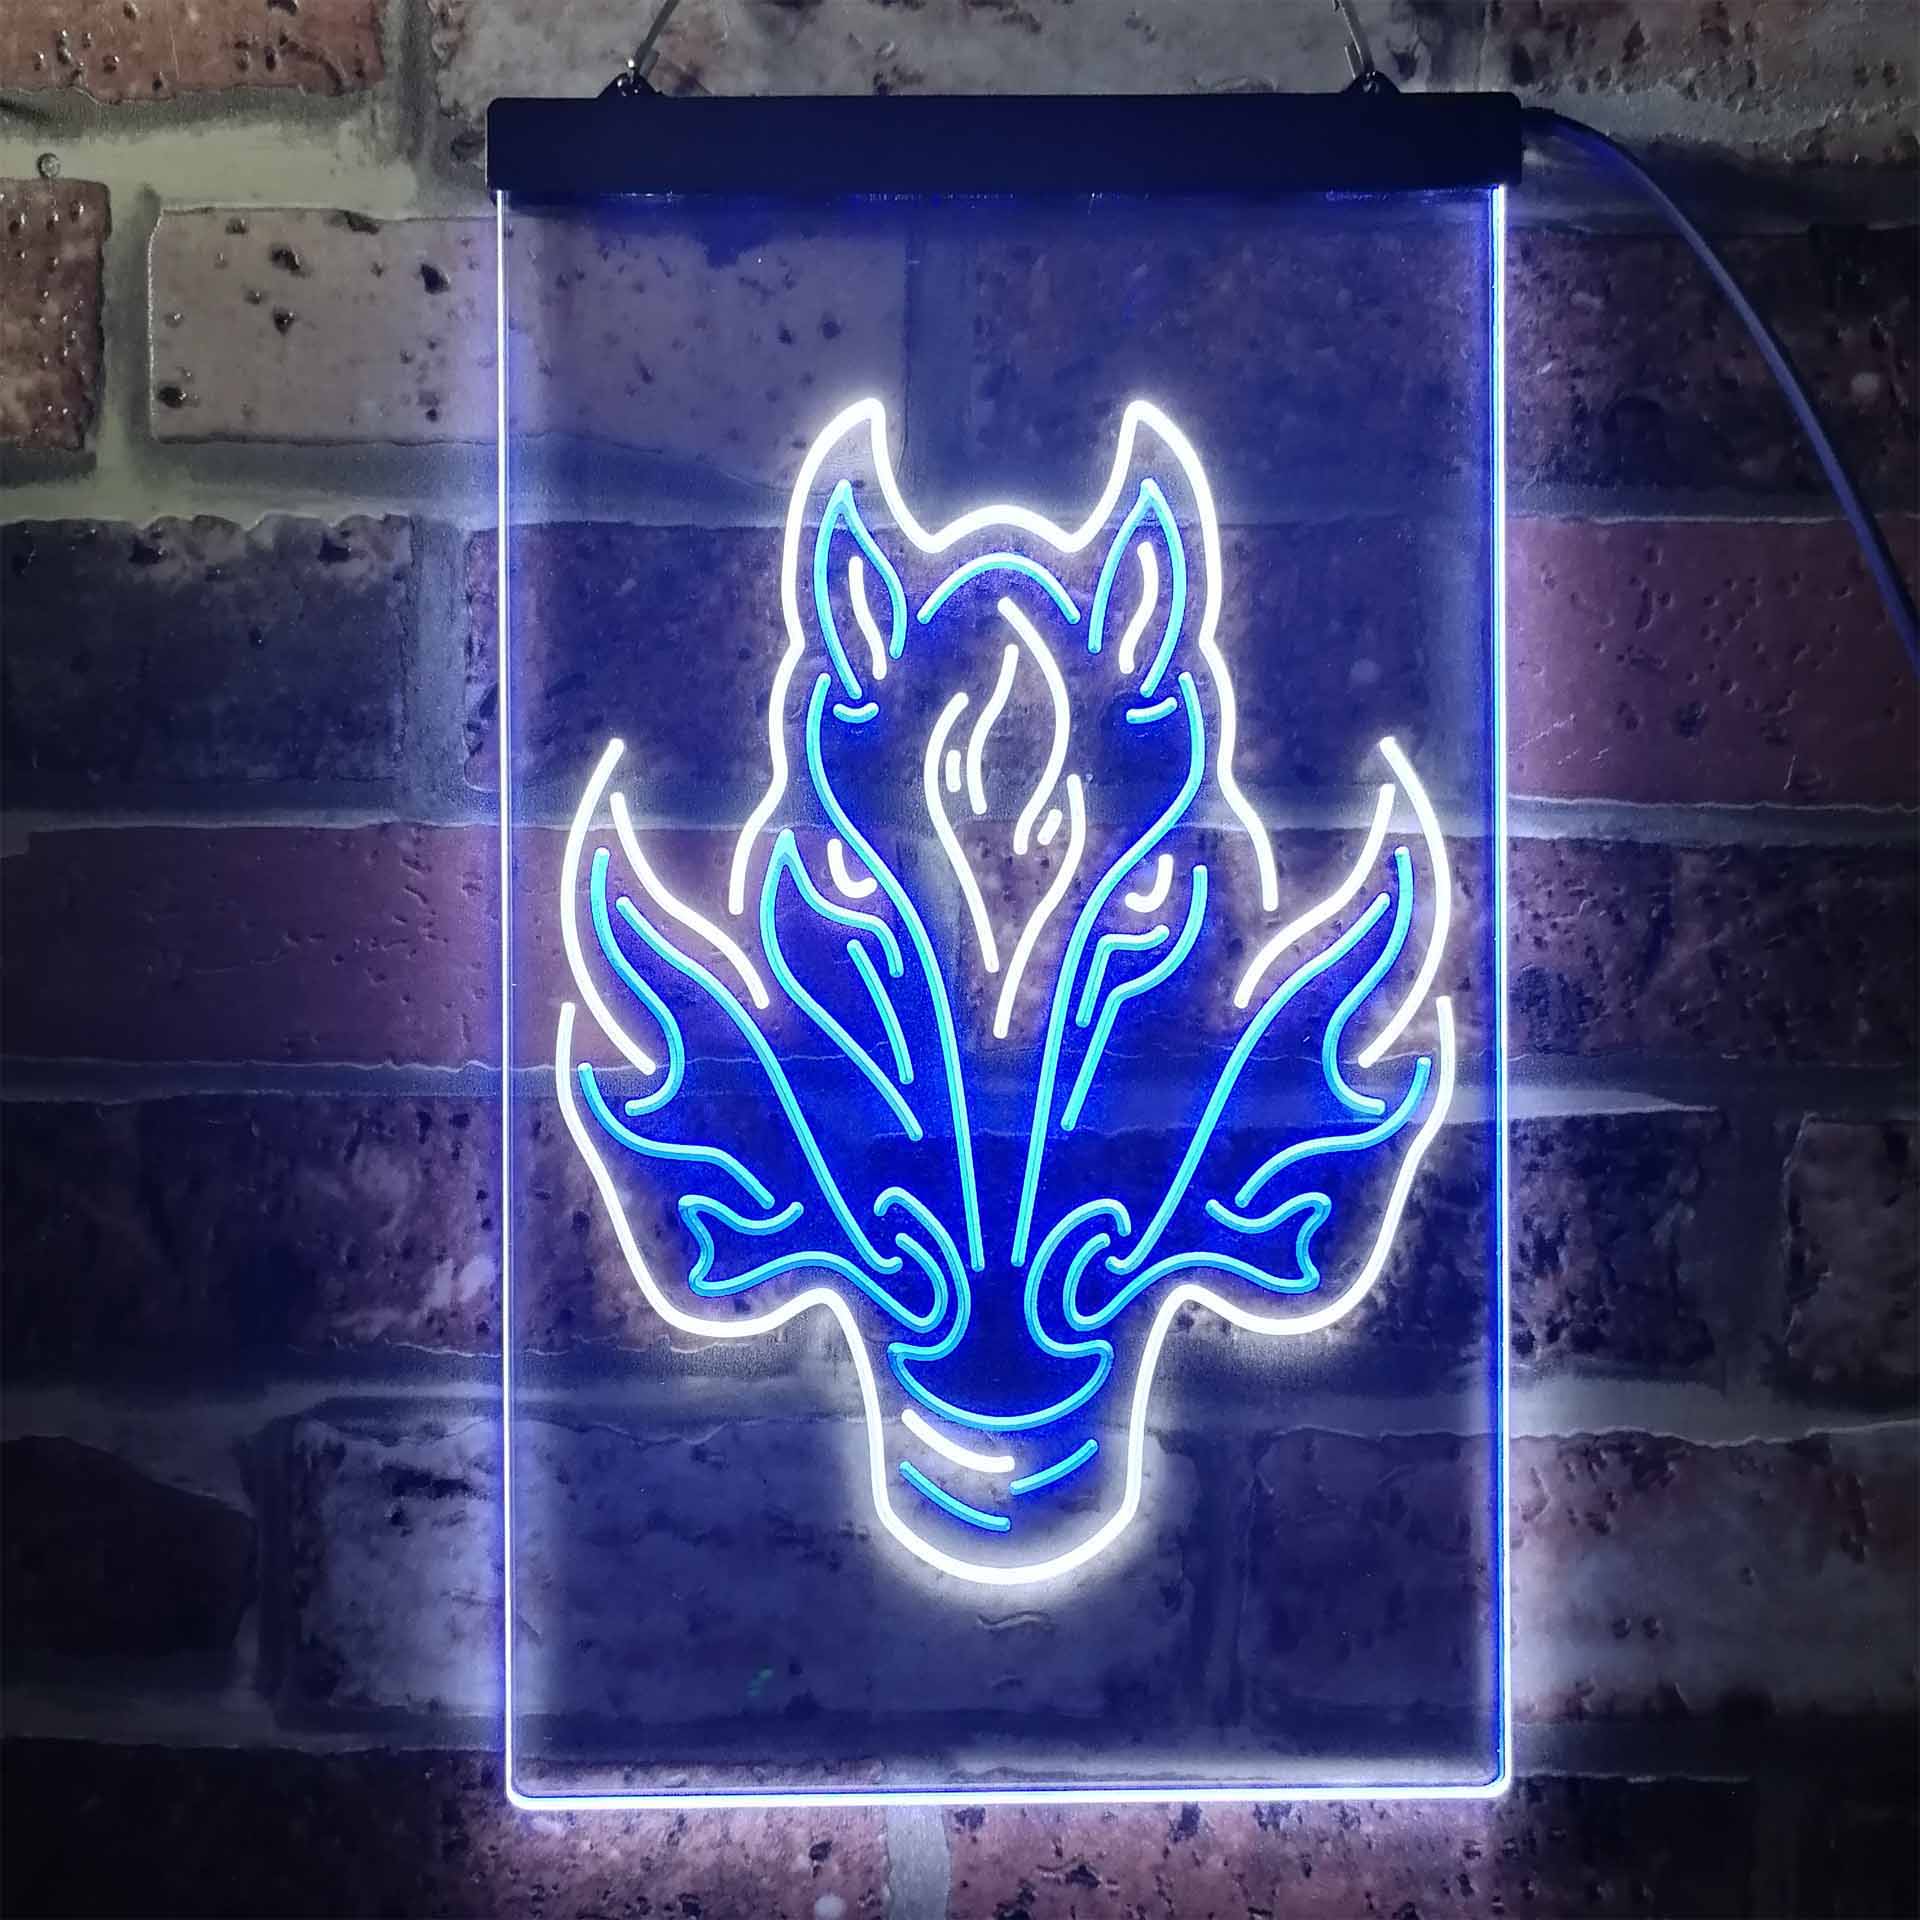 Calgary Flames Neon-Like LED Sign